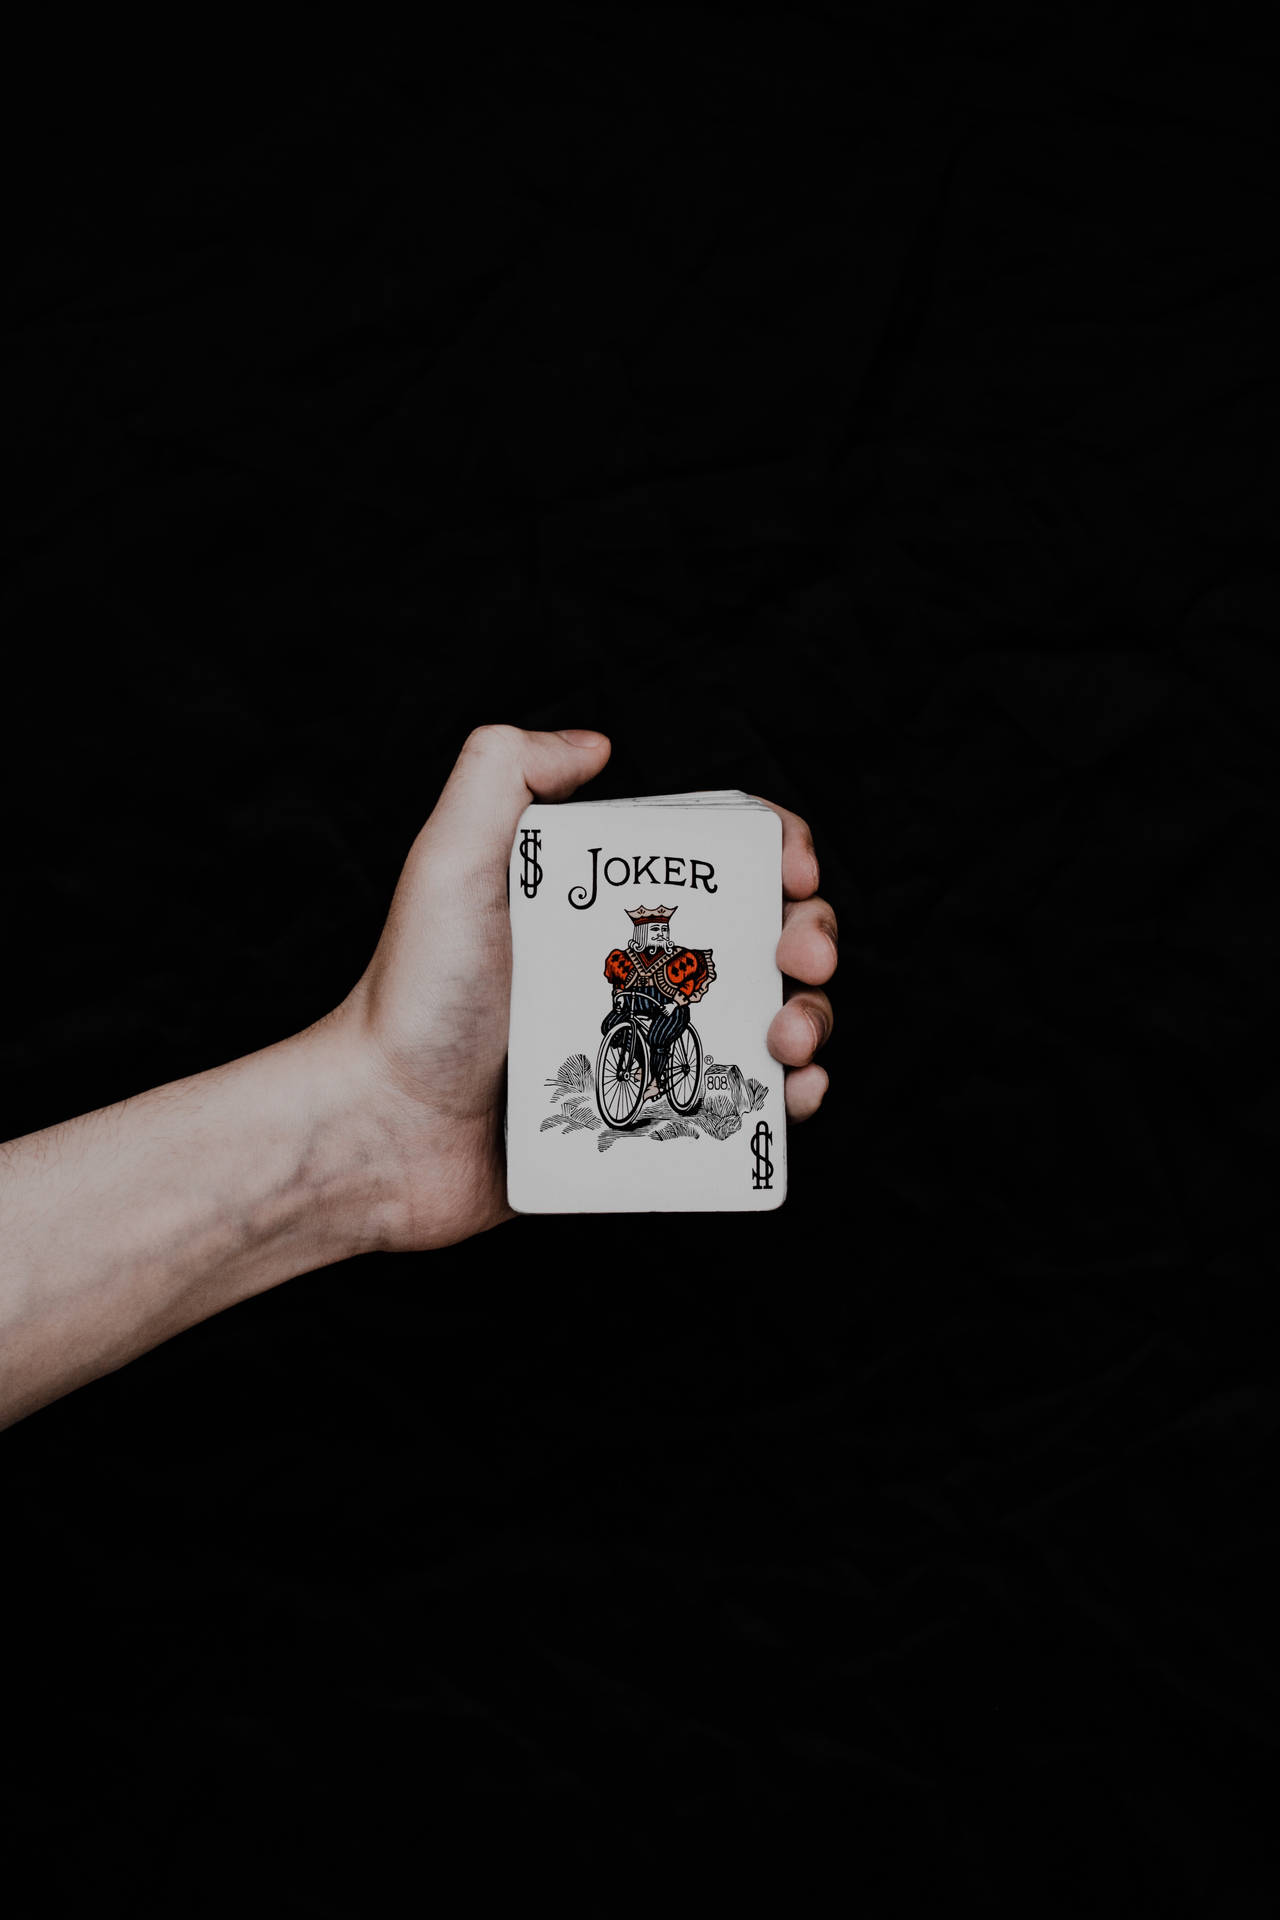 Joker Iphone Card Background